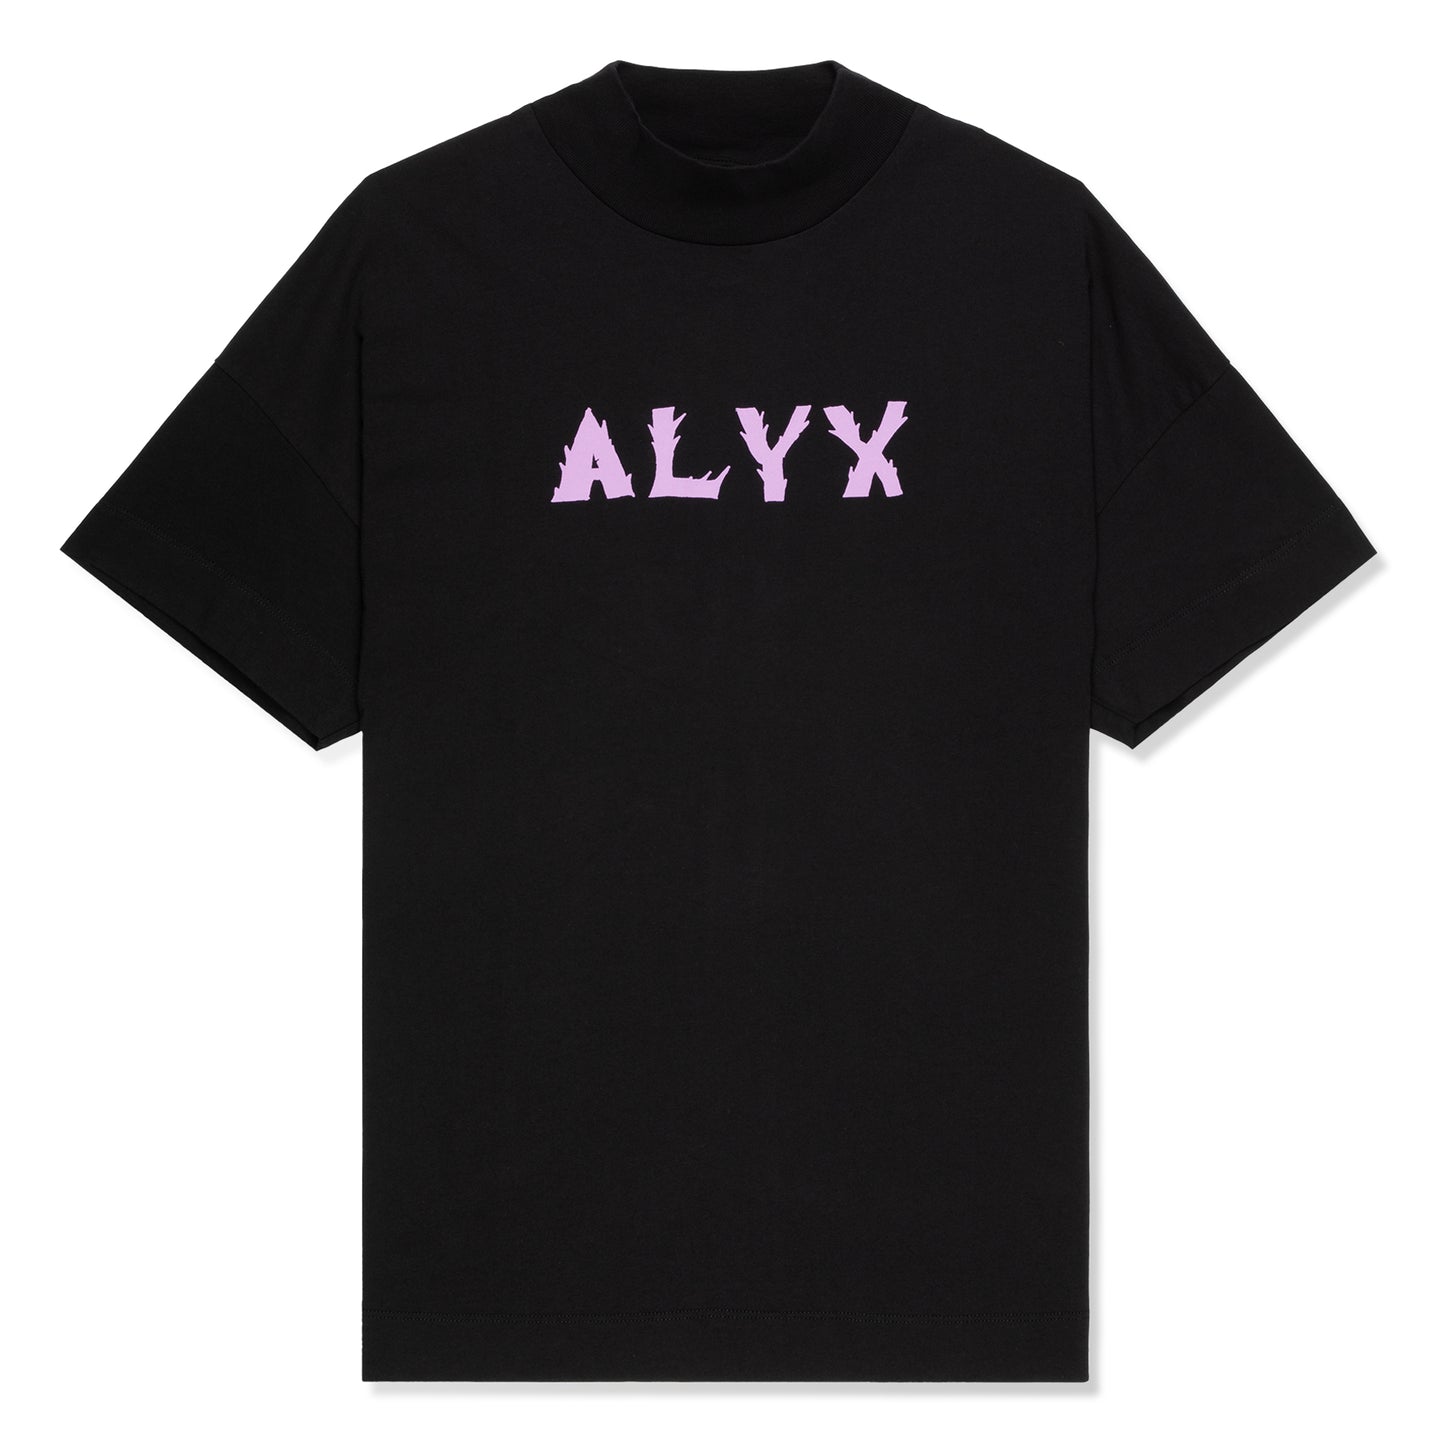 1017 ALYX 9SM Short Sleeve Tee (Black)